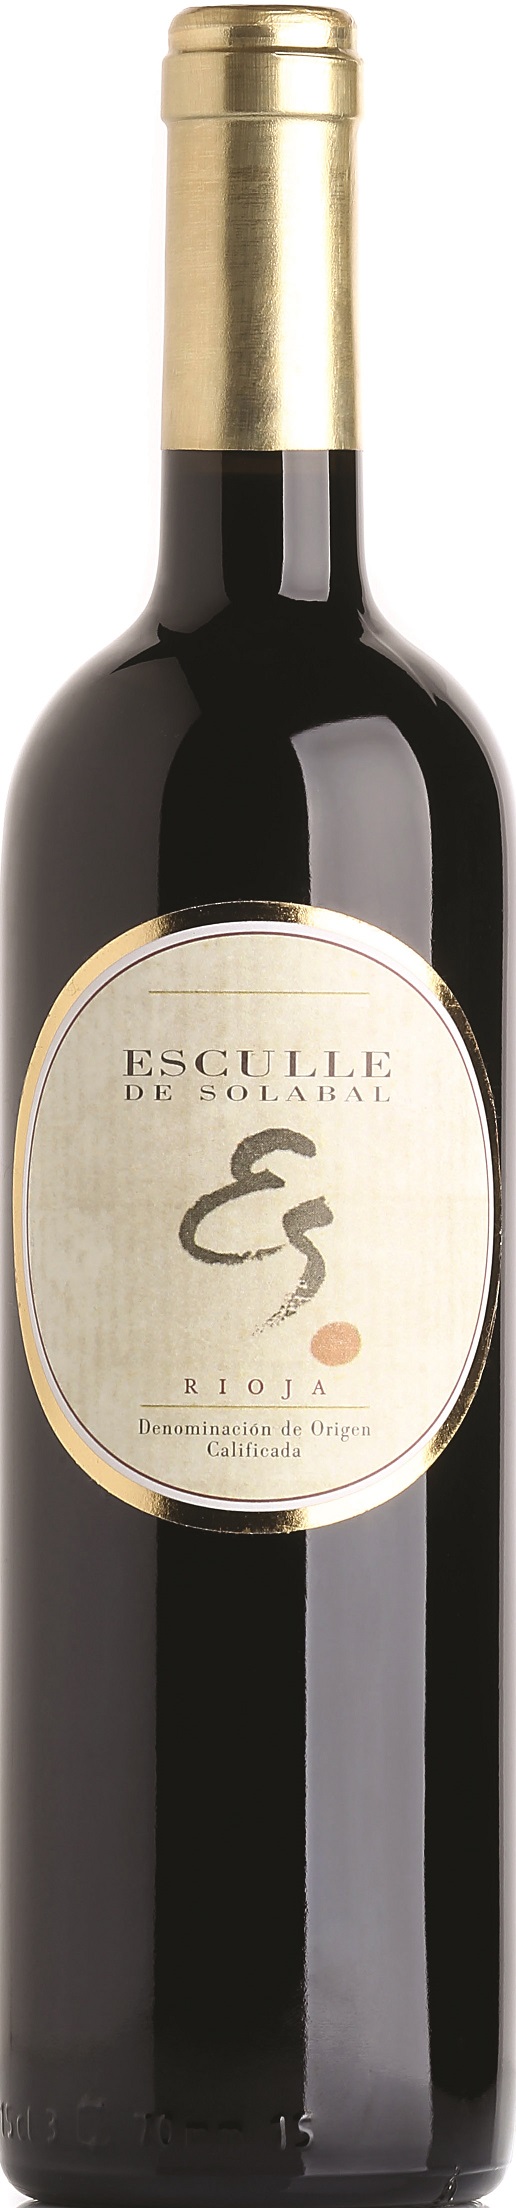 Image of Wine bottle Esculle de Solabal